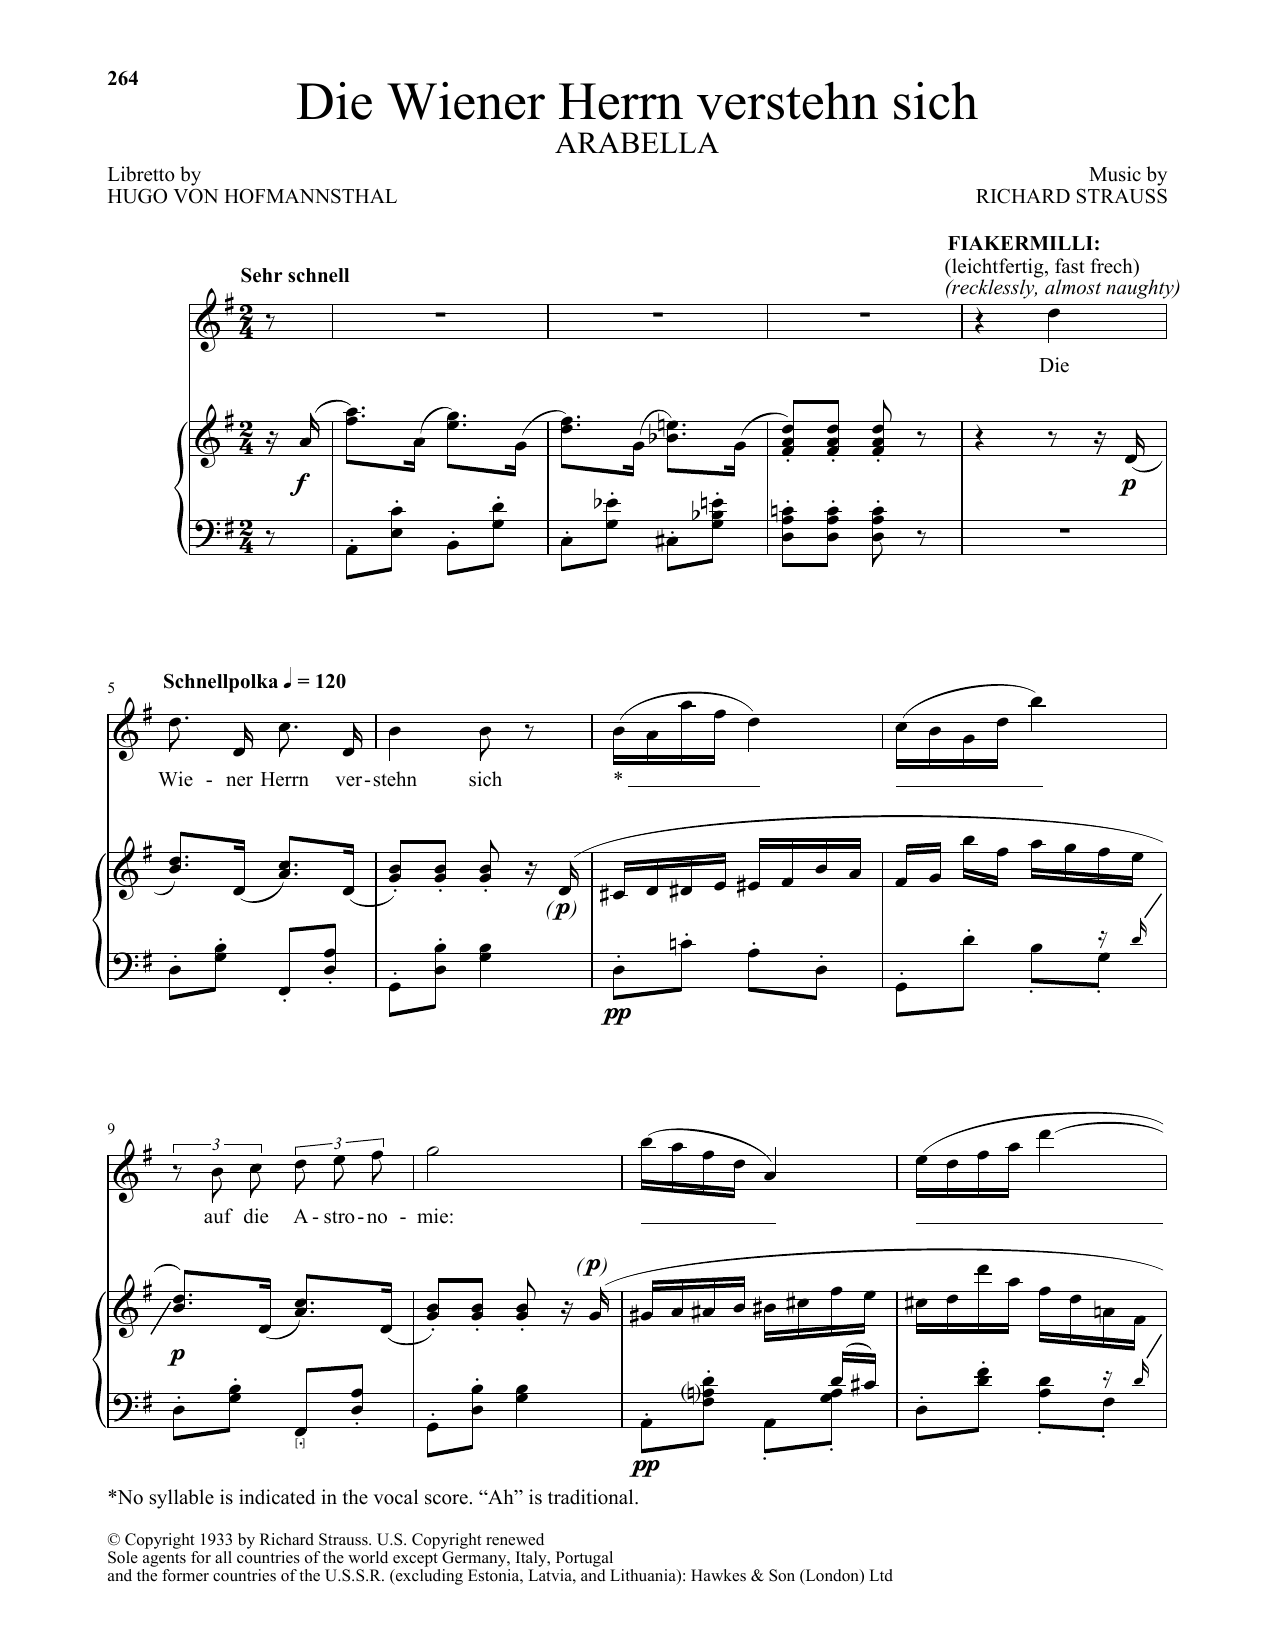 Richard Strauss Die Wiener Herrn Verstehn Sich (from Arabella) Sheet Music Notes & Chords for Piano & Vocal - Download or Print PDF